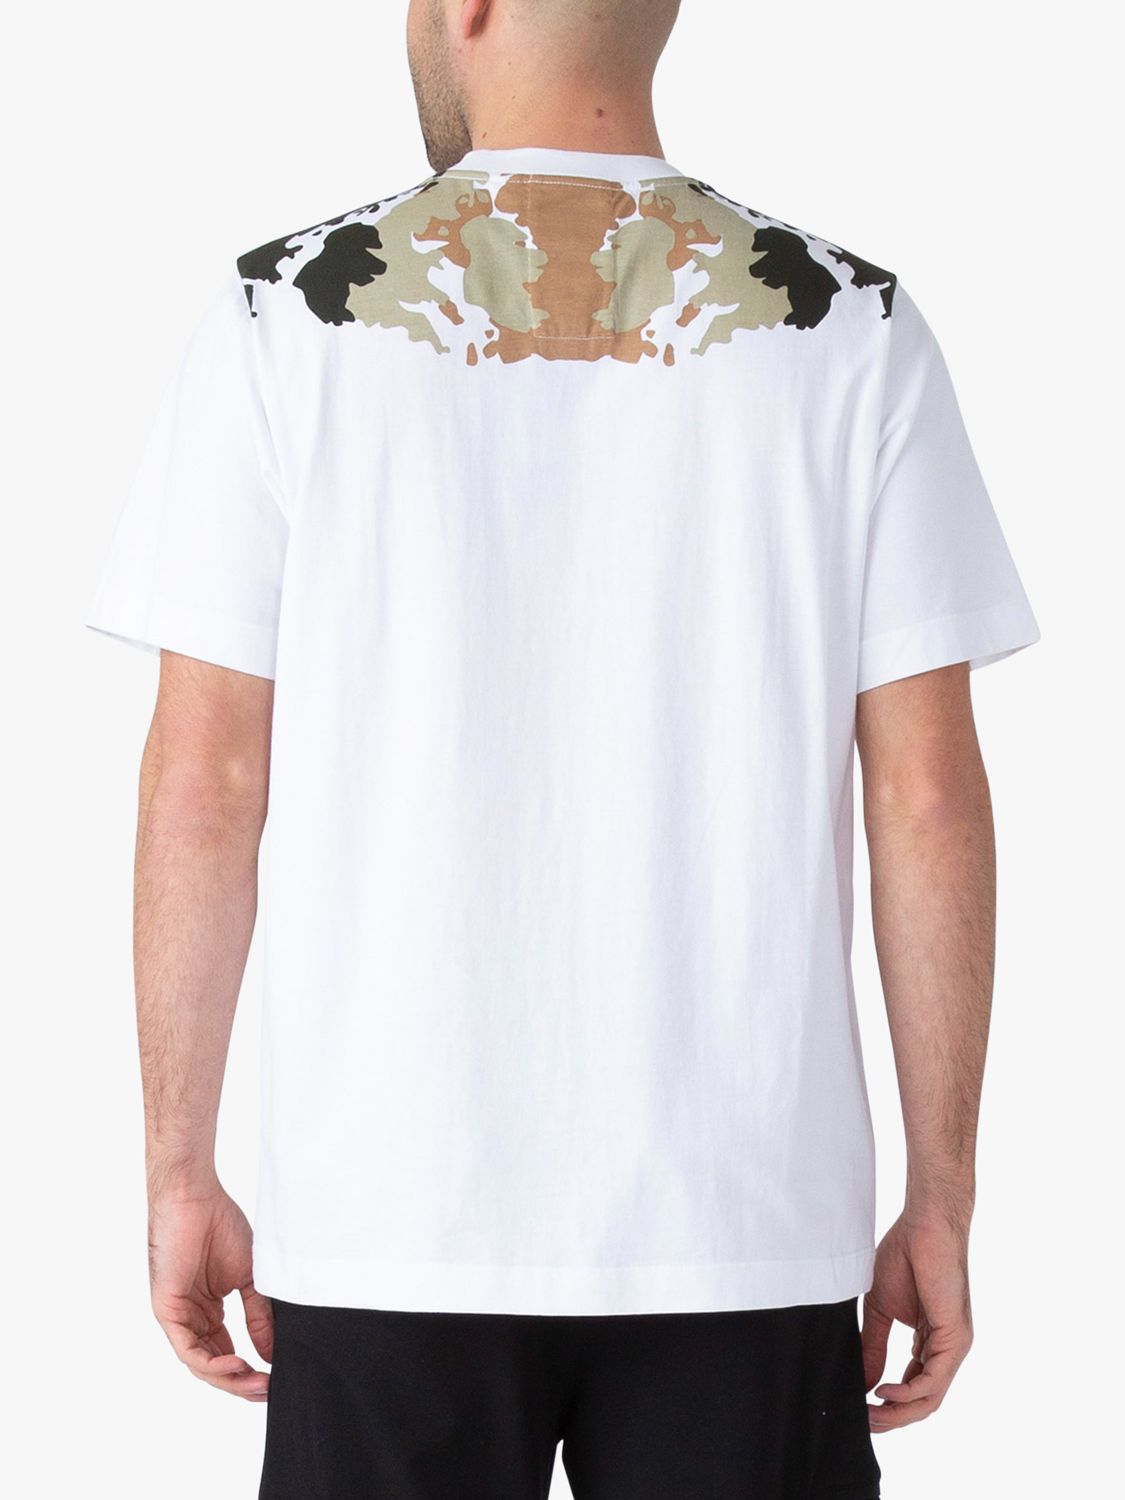 LUKE 1977 Swift Abstract Print Neck T-Shirt, White/Multi, S